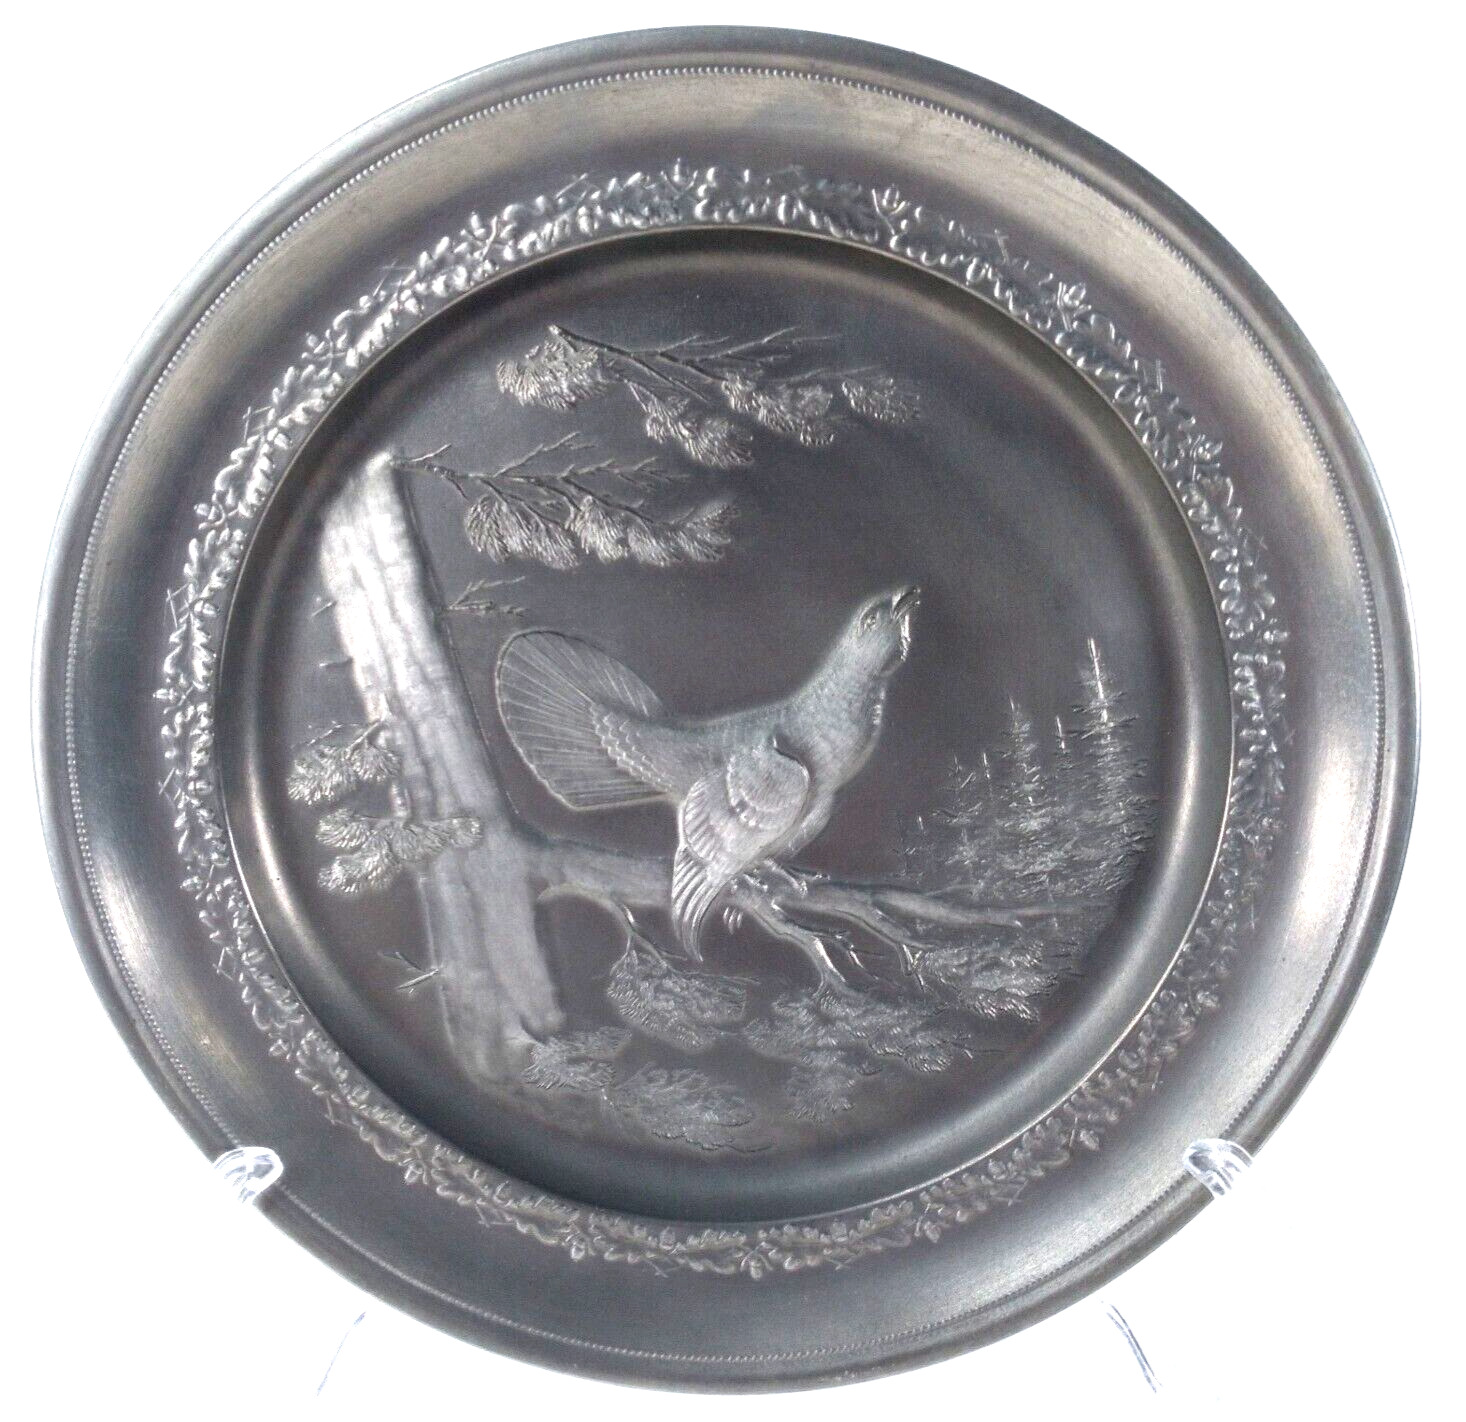 Vintage Innung Deutscher Zinn - Giesser Pewter Wall Plate Pheasant Grouse Huntin